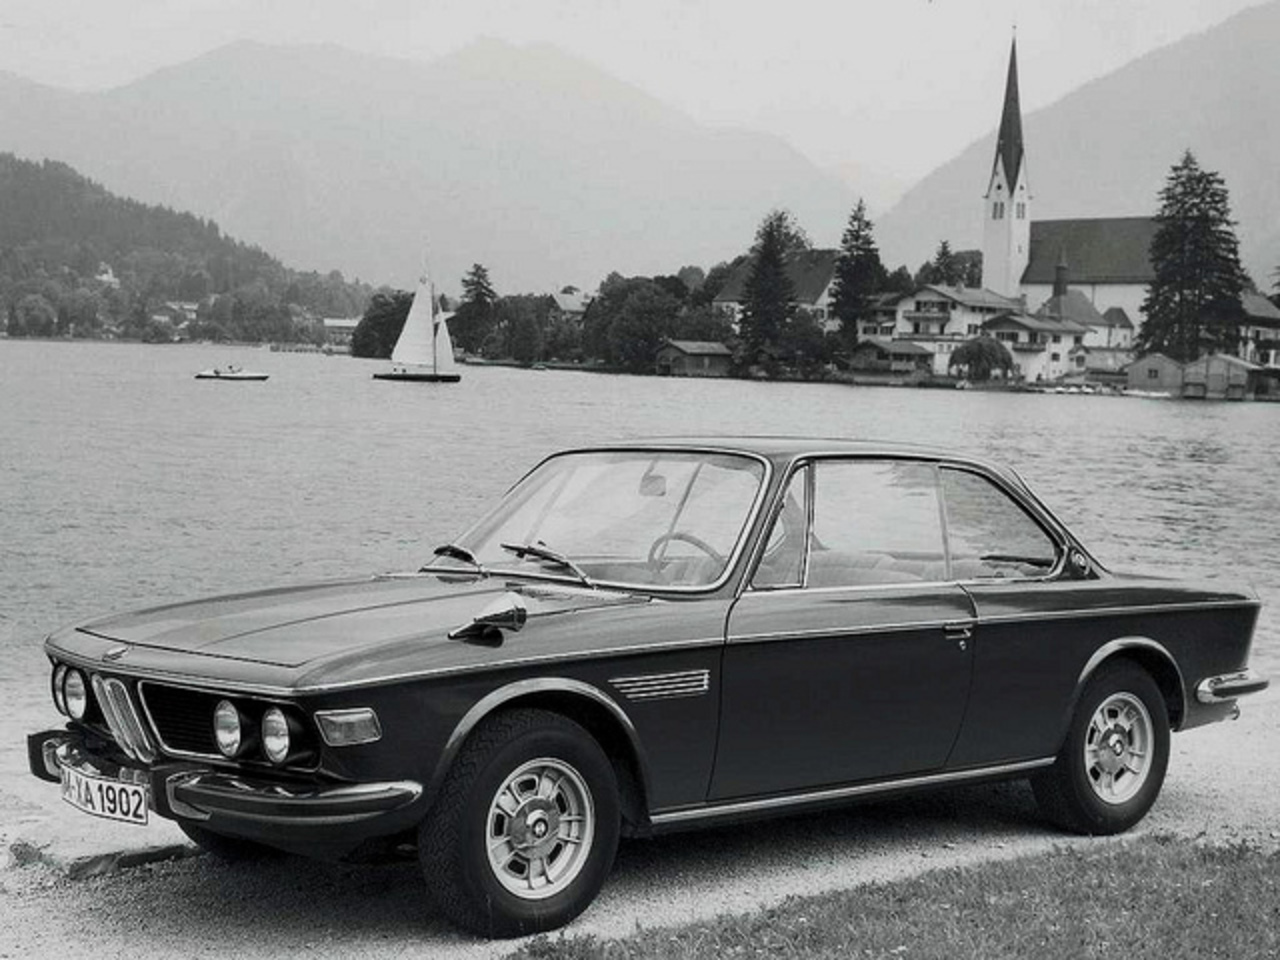 BMW 2800 CS (E9) | Flickr - Photo Sharing!